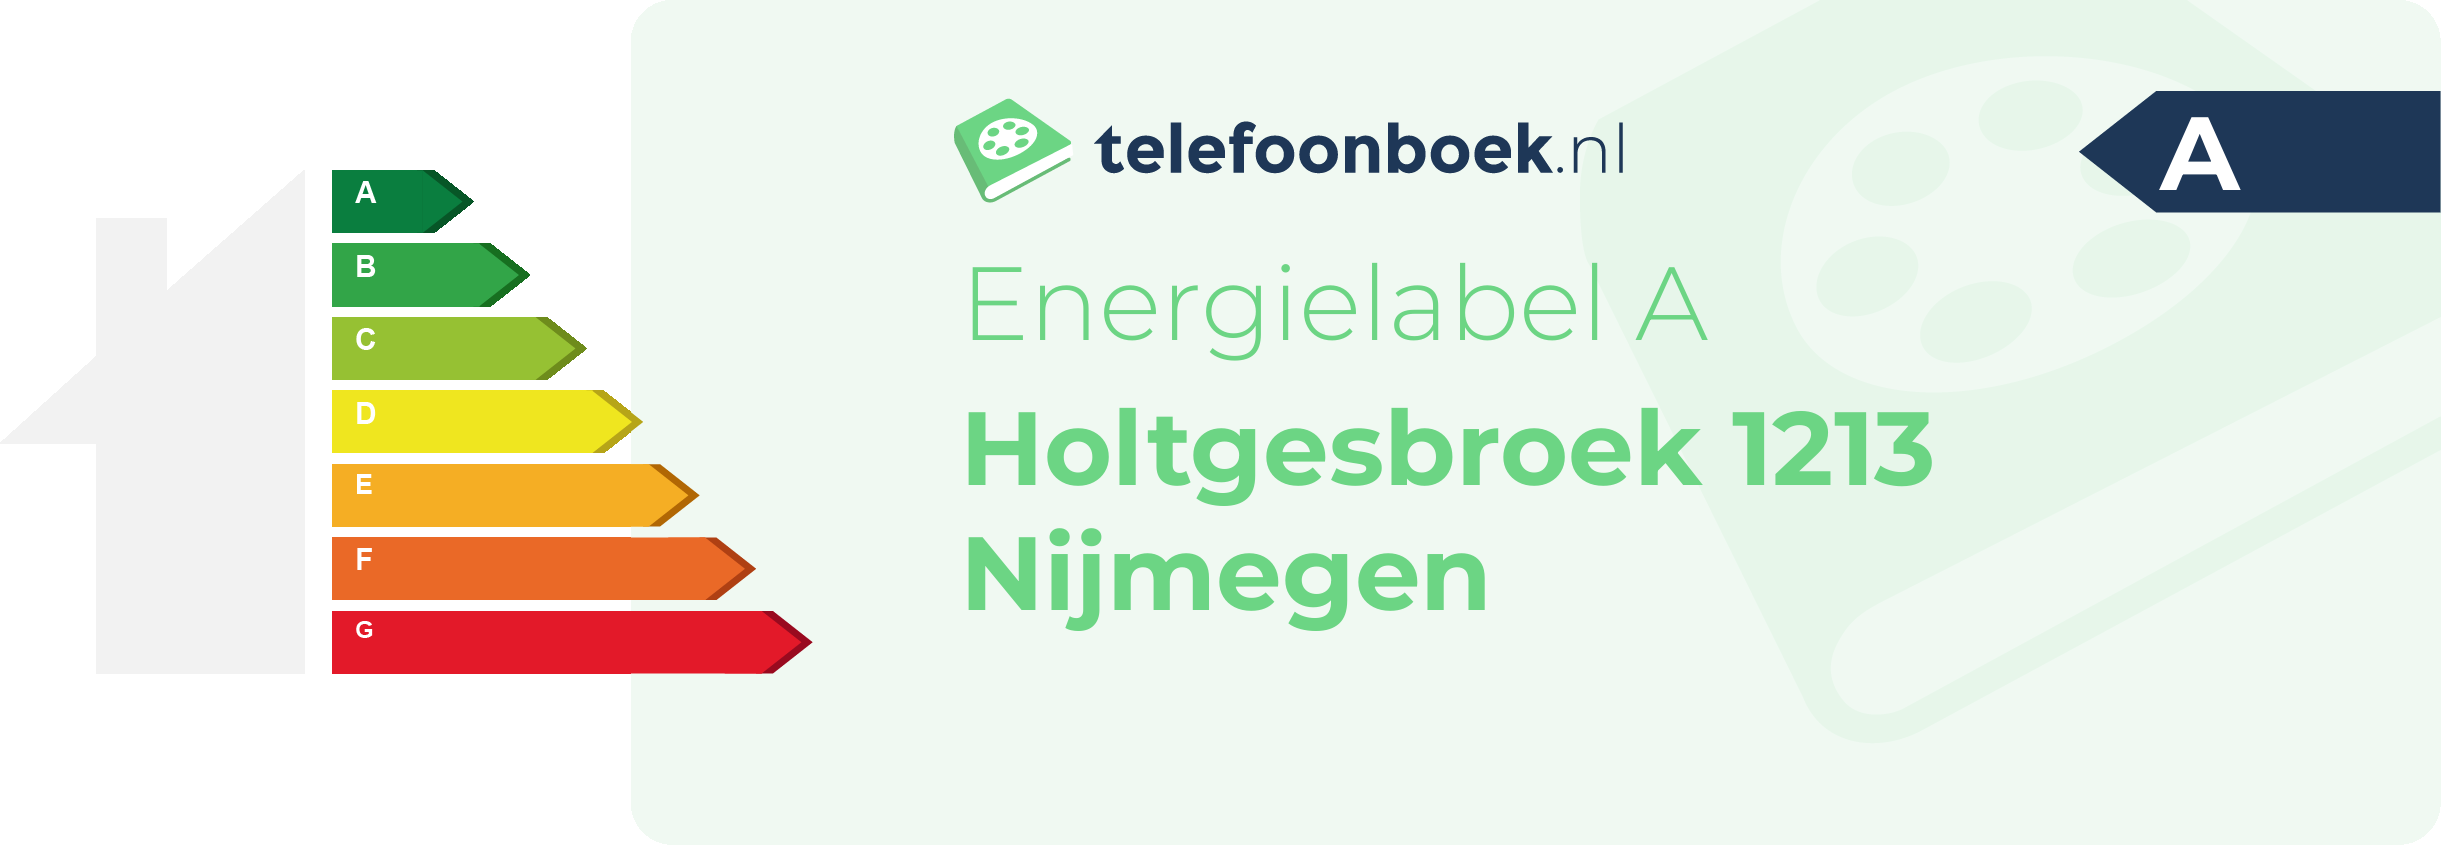 Energielabel Holtgesbroek 1213 Nijmegen